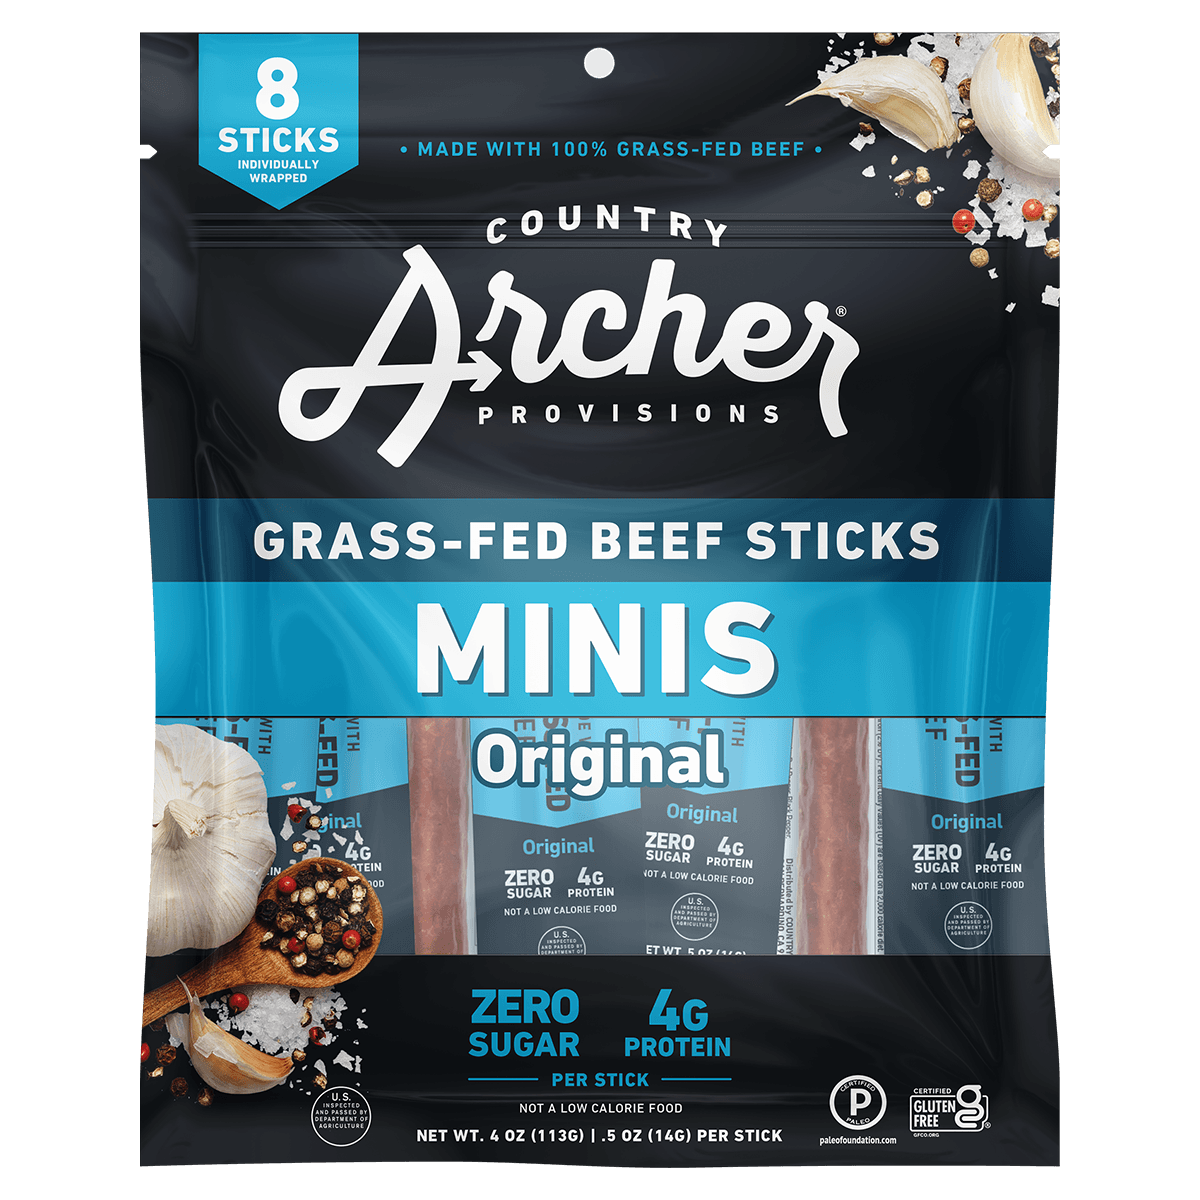 Country Archer Beef Sticks, Grass-Fed, Original, Minis - 8 pack, 0.5 oz beef sticks